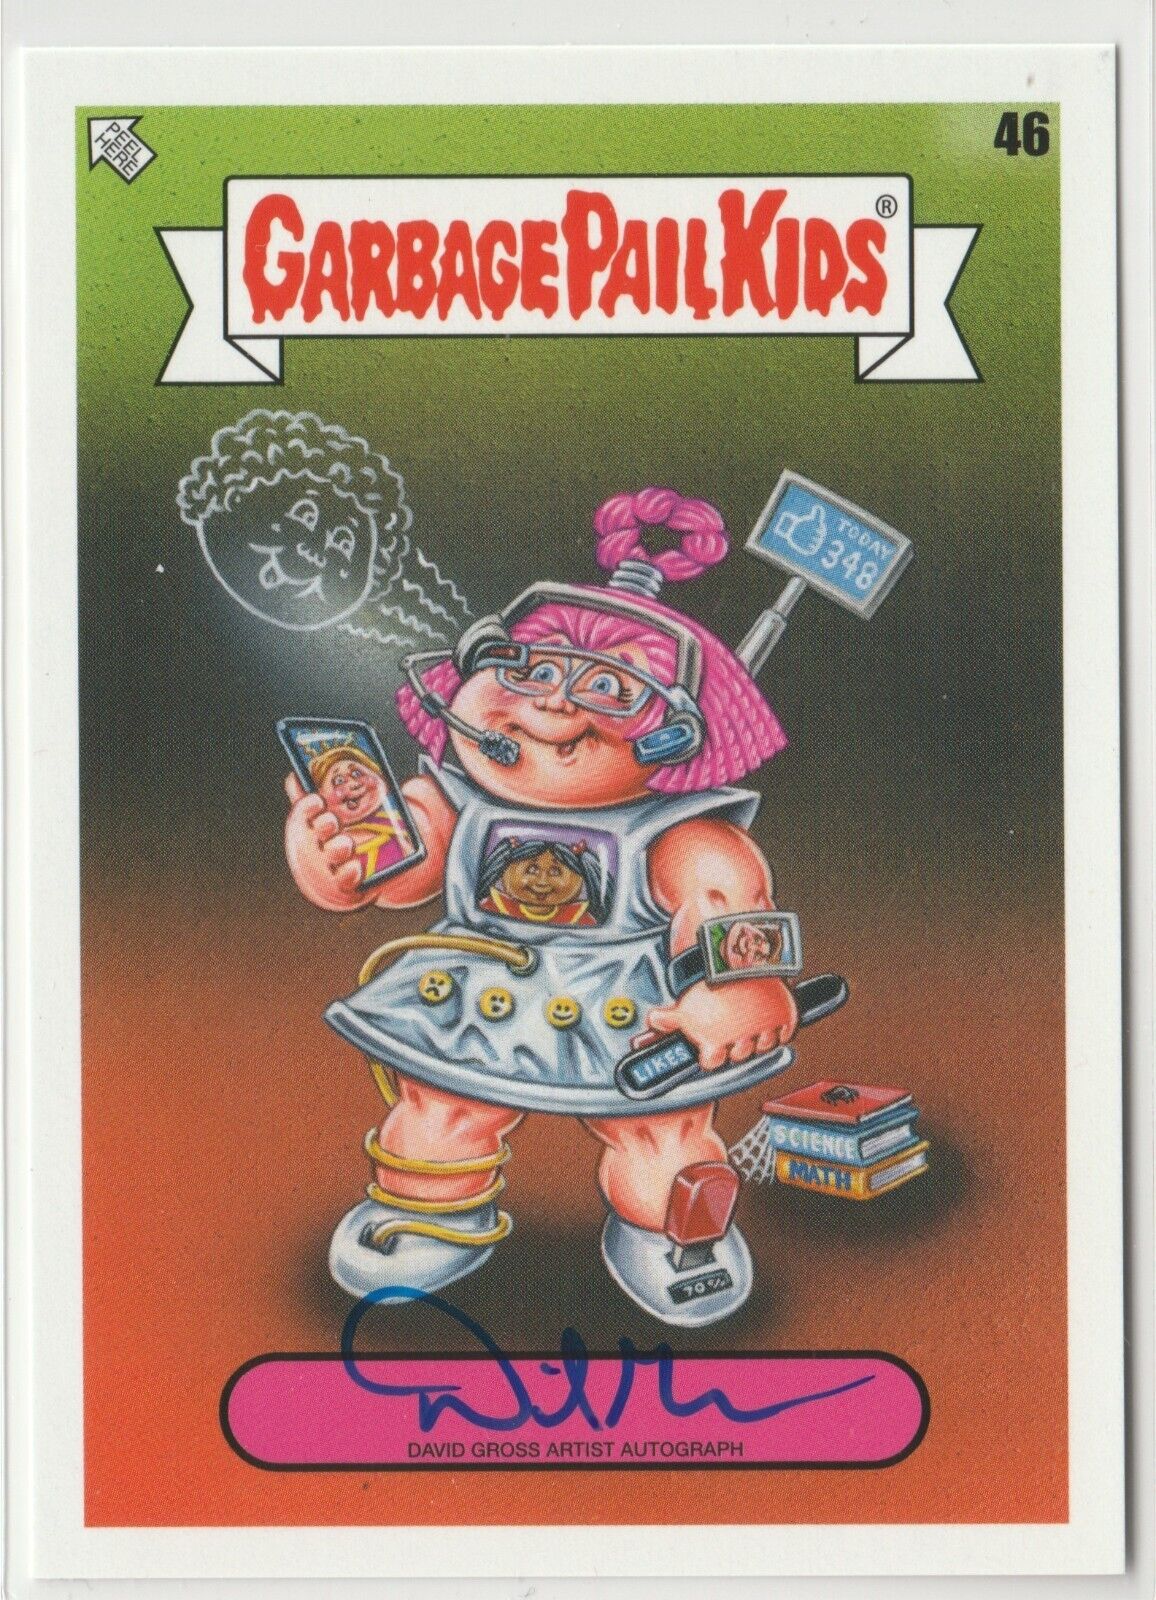 Garbage Pail Kids GPK AUTO David Gross Artist Autograph serial number 23/50 SP